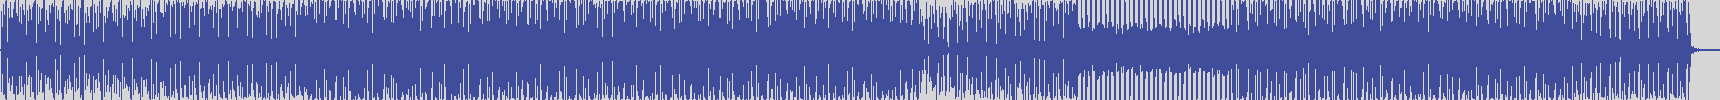 nf_boyz_records [NFY067] Progressive Color - Calm Geezer [Airport Mix] audio wave form